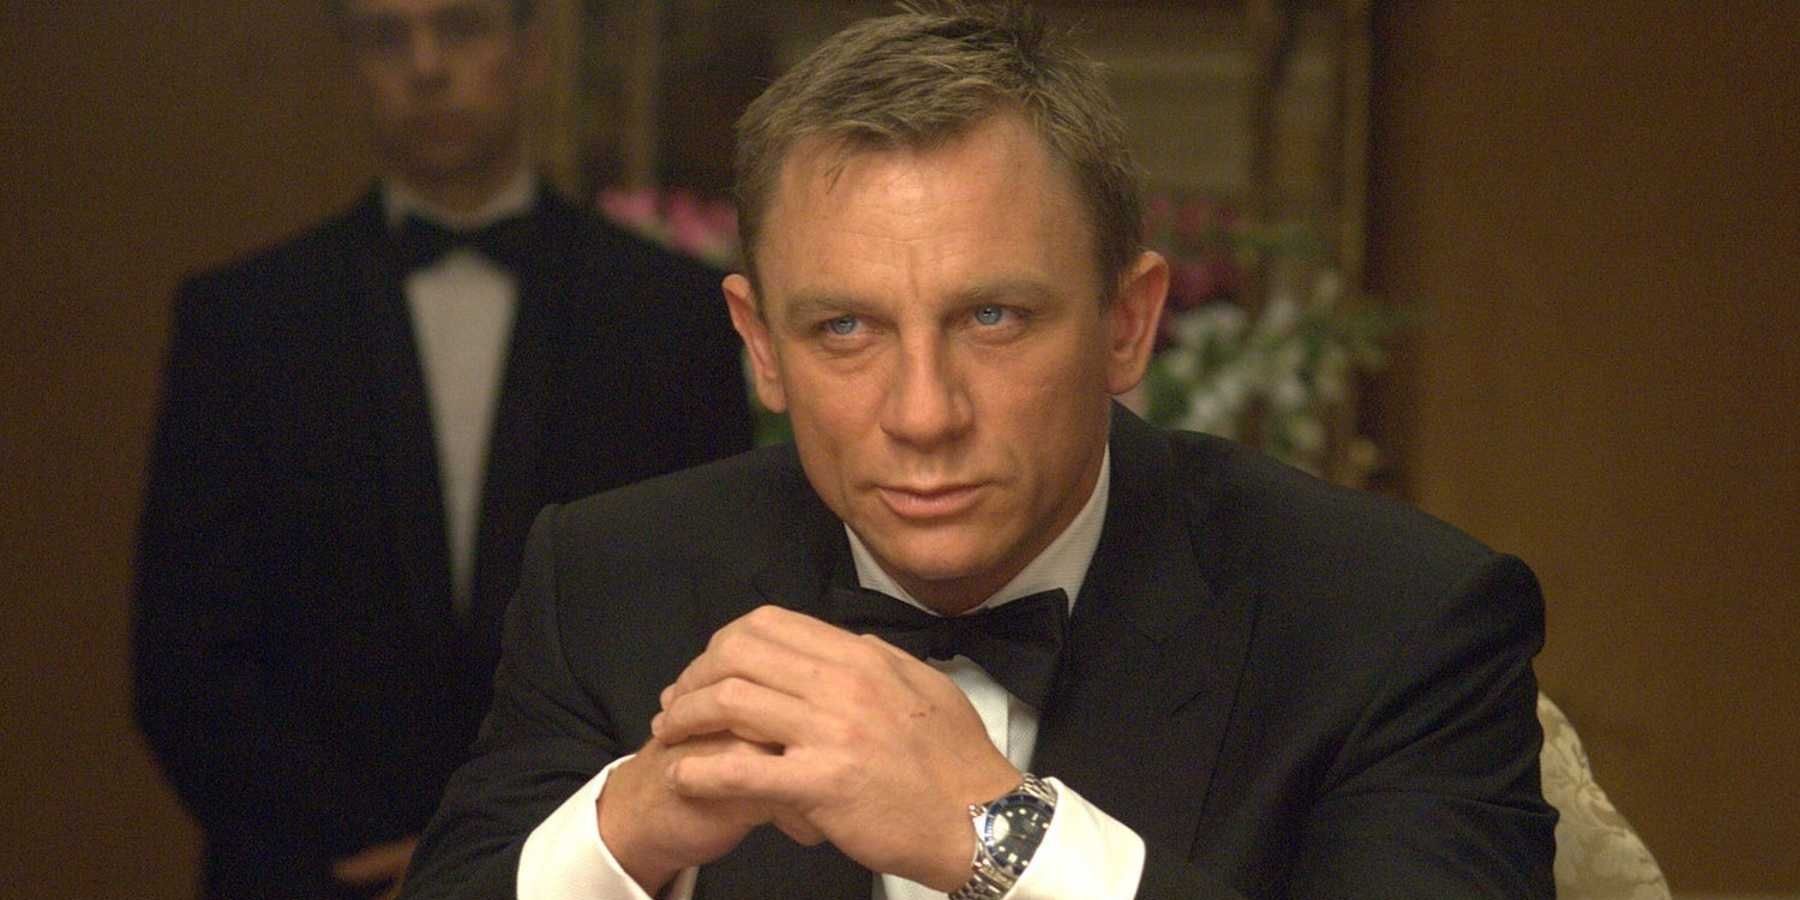 007 The Darkest James Bond Movies Ranked